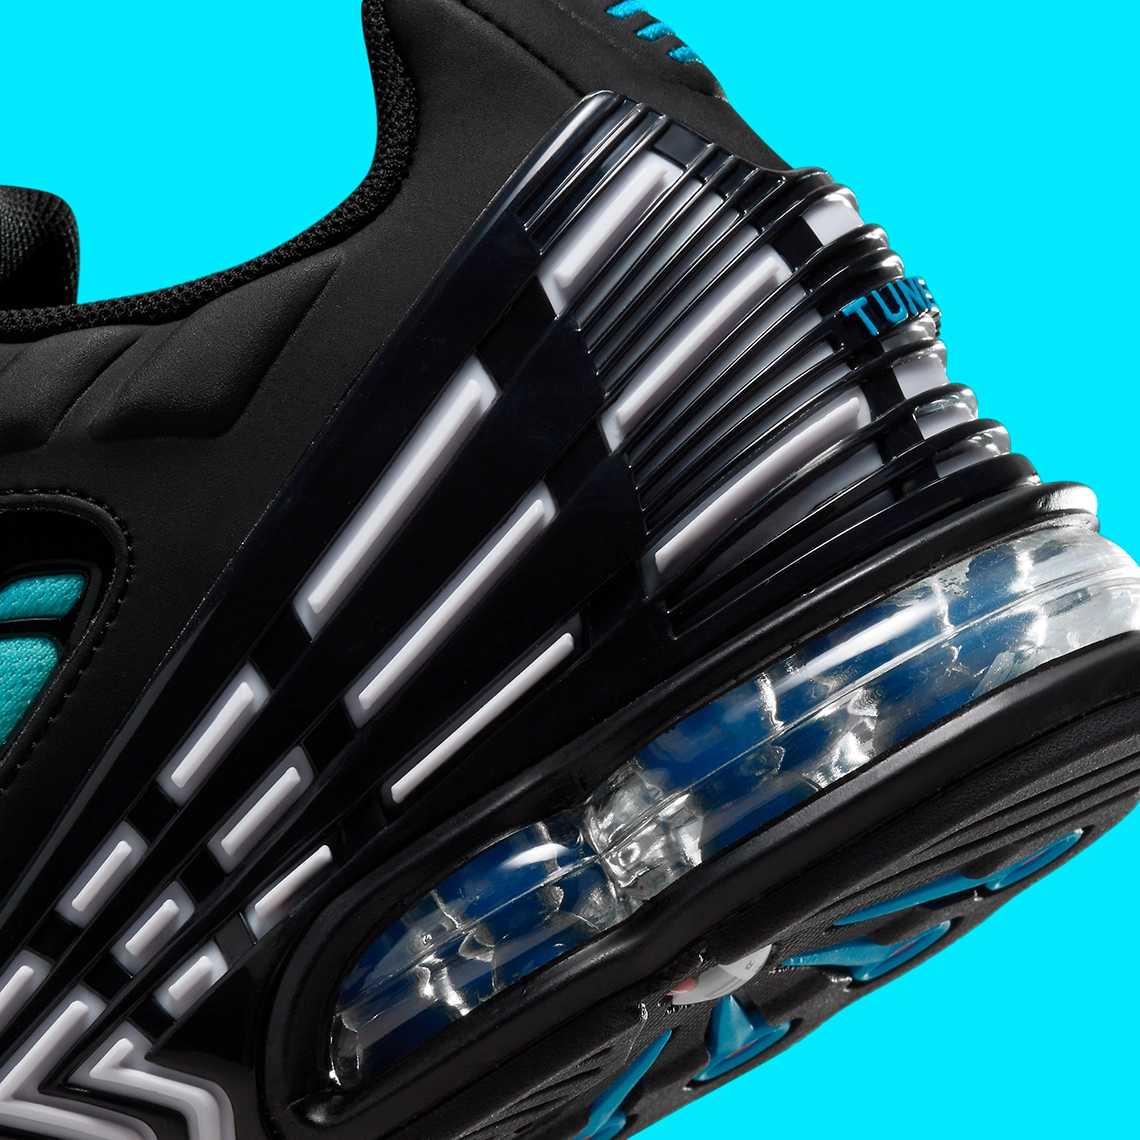 
Nike Air Max Plus 3 "Aqua": A retrofuturistic sneaker featuring gradient blue mesh uppers, glossy black liquid cage, and split Air Max sole units with transparent windows.